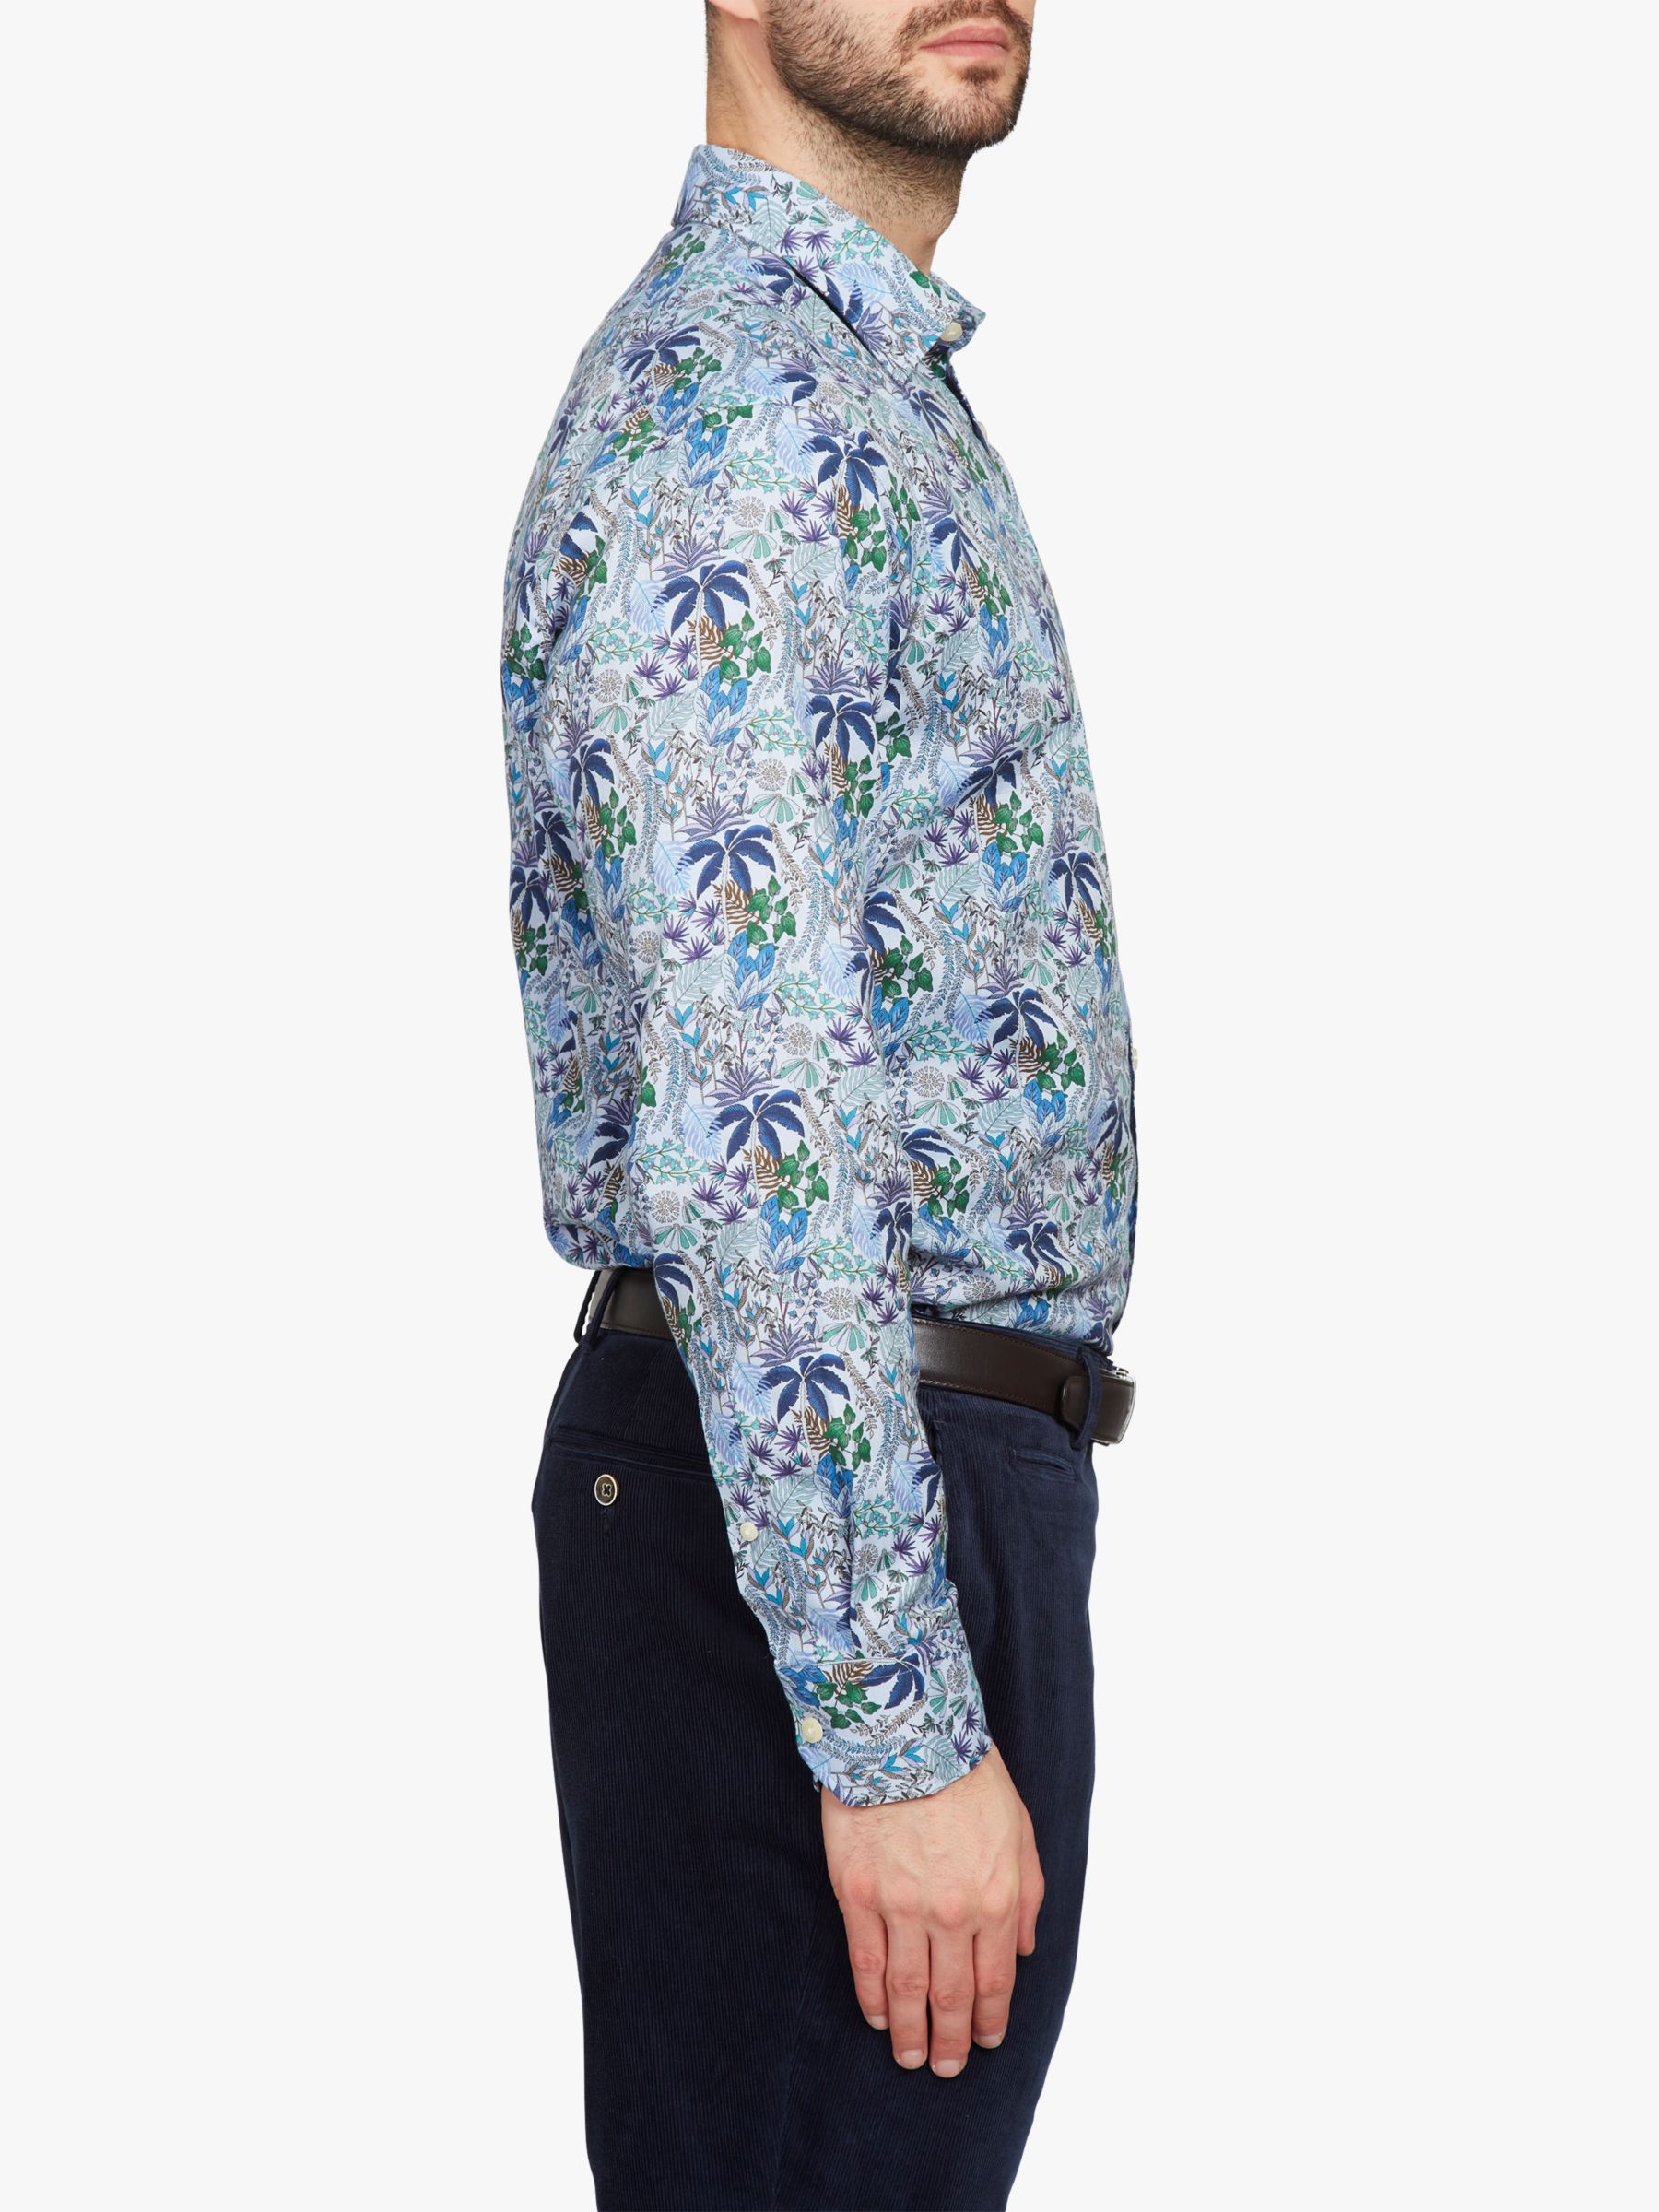 Simon Carter Oxford Palms Shirt, Blue Multi, 15